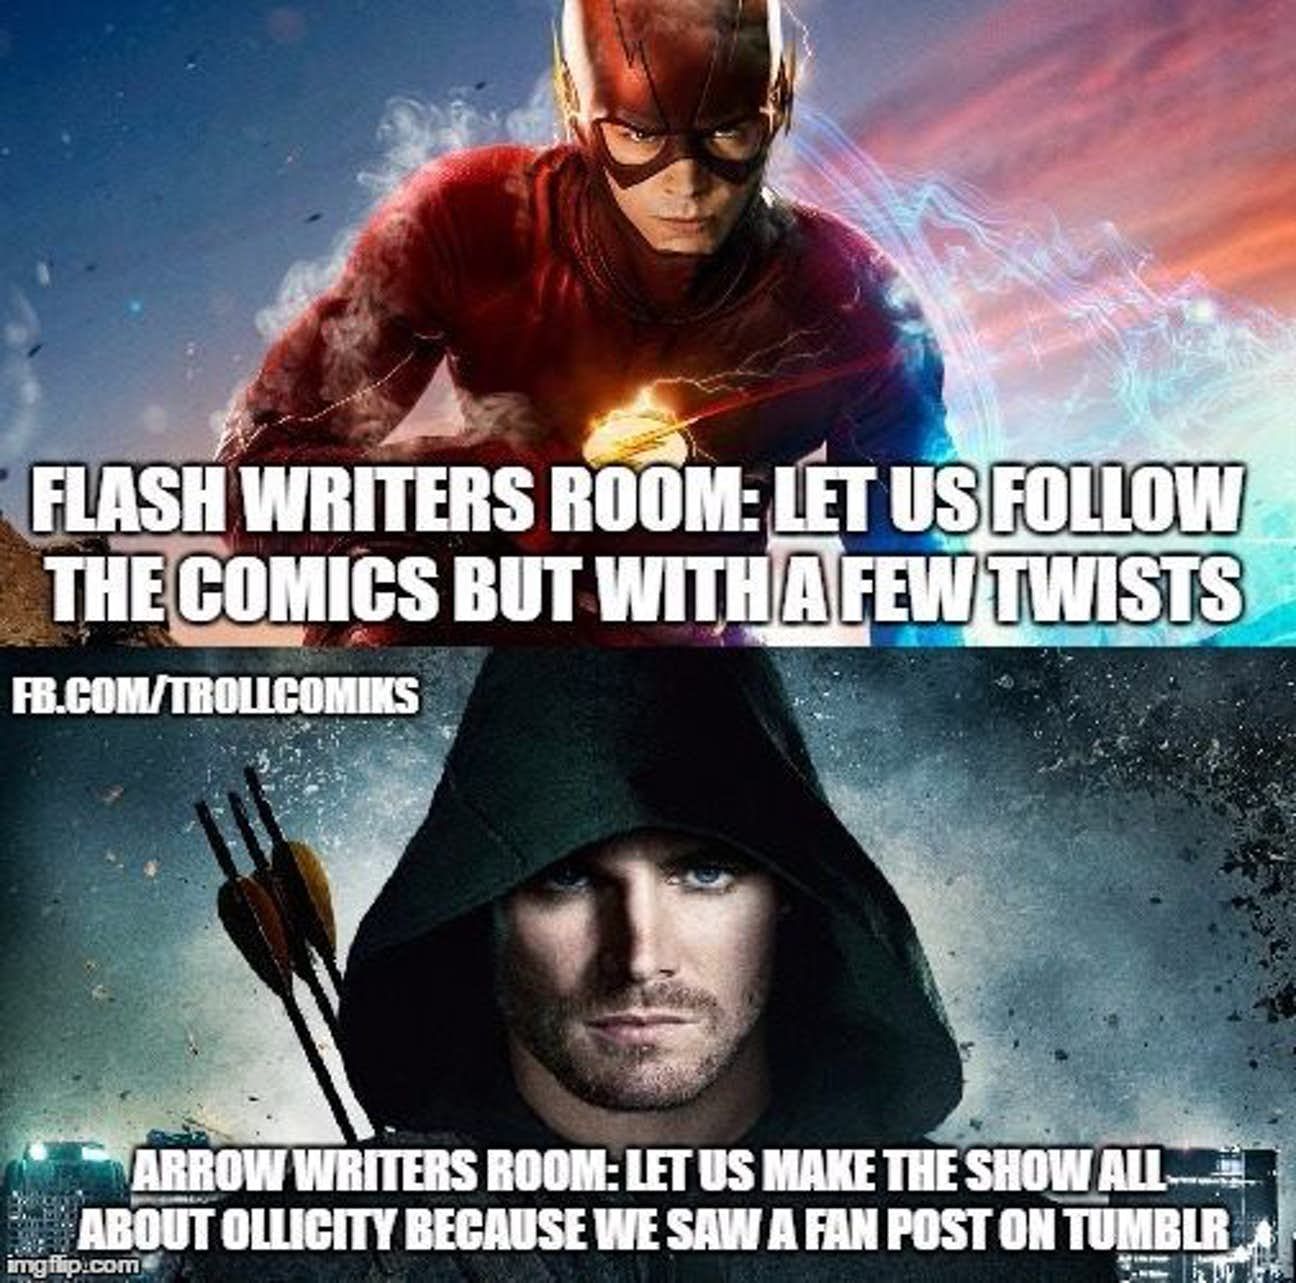 The Flash vs Arrow writers meme